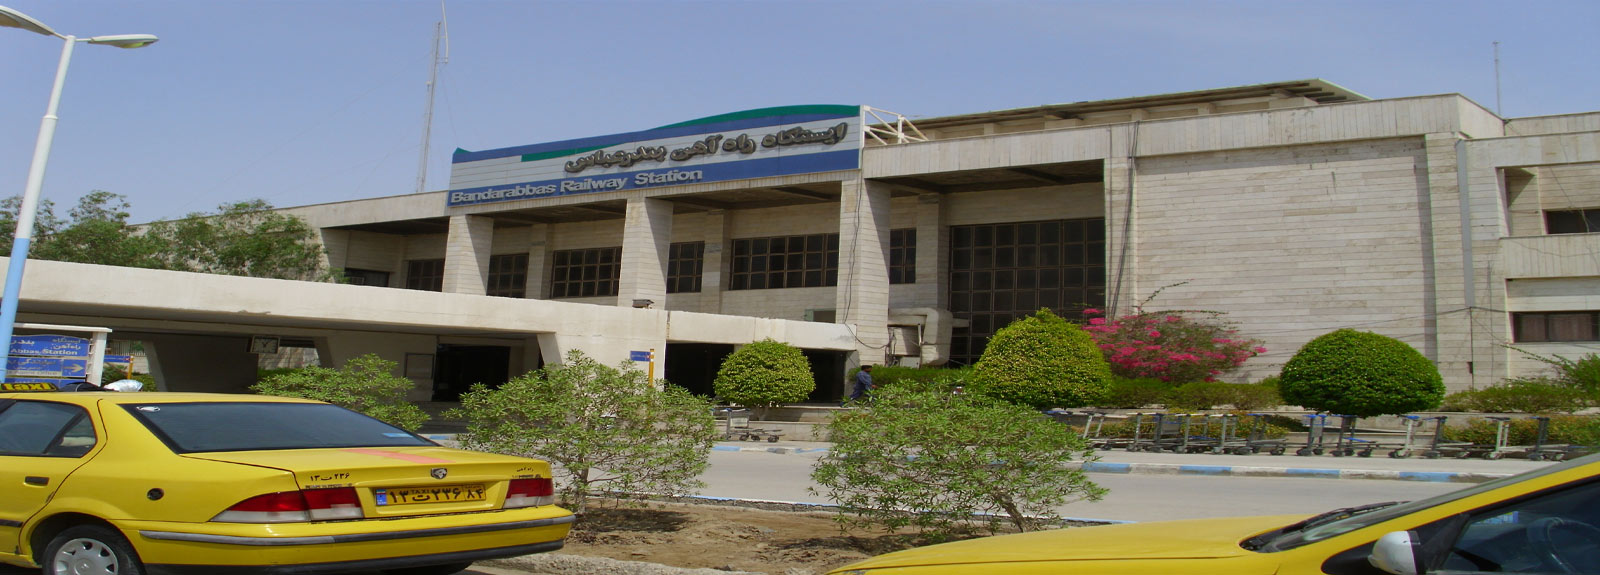 Bandar Abbas Railway Station ( Bandar Abbas Train Station)